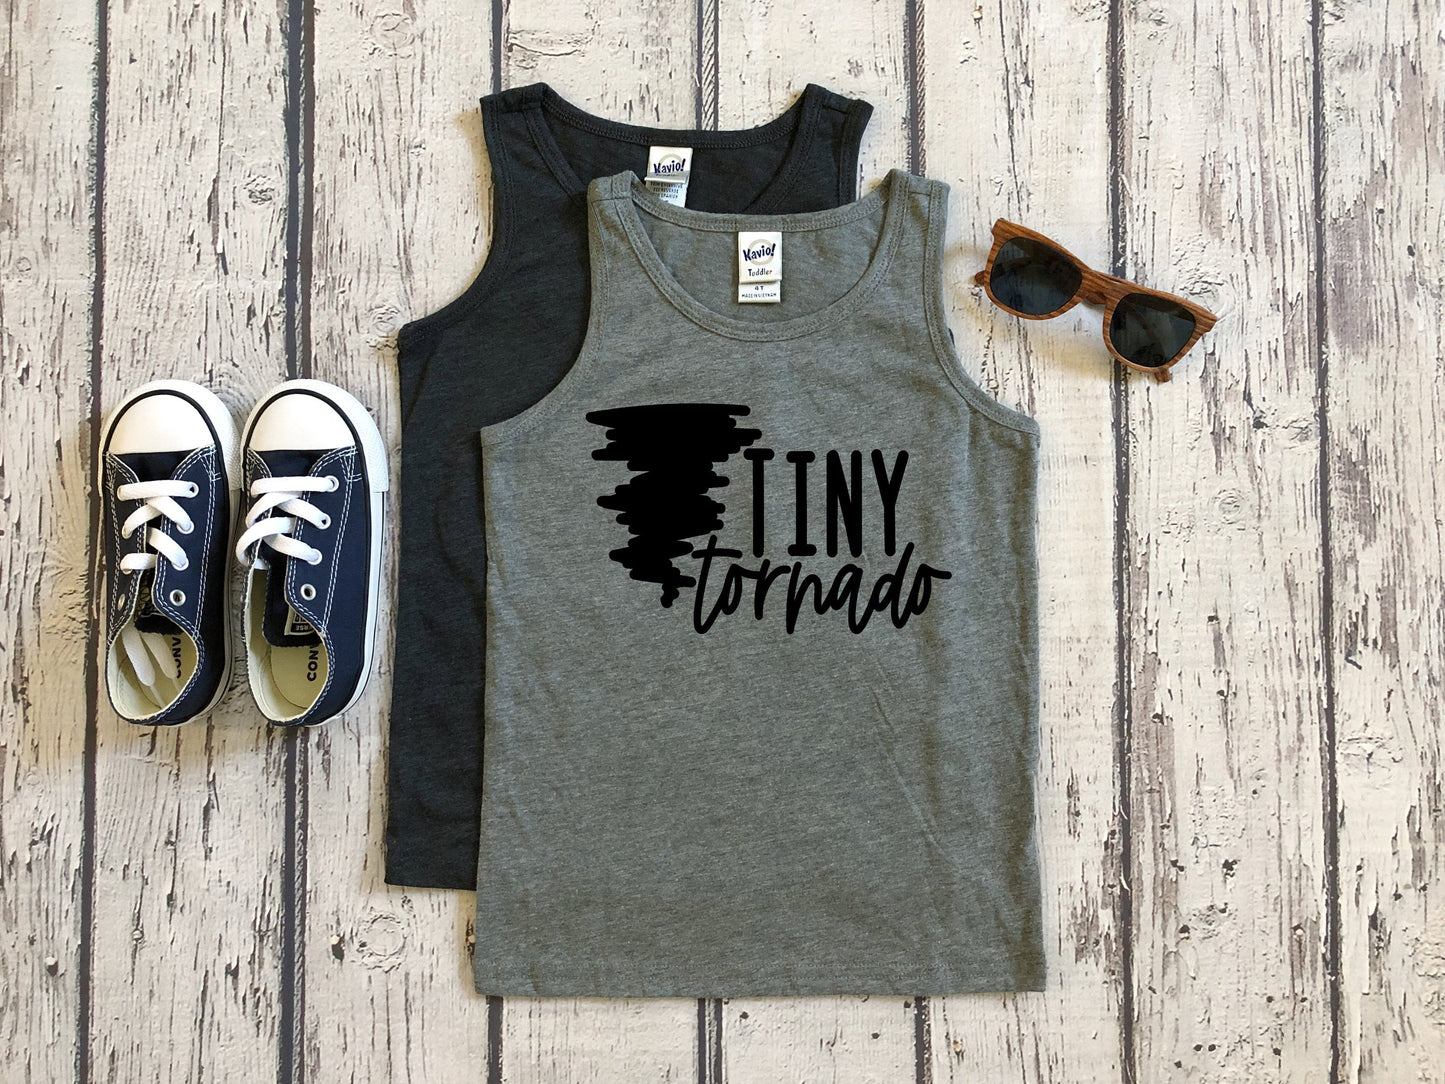 Tiny Tornado Infant or Toddler Tank Top - Funny Toddler Shirt - Mess Maker - Funny Boys Shirt - Boys Summer Shirt